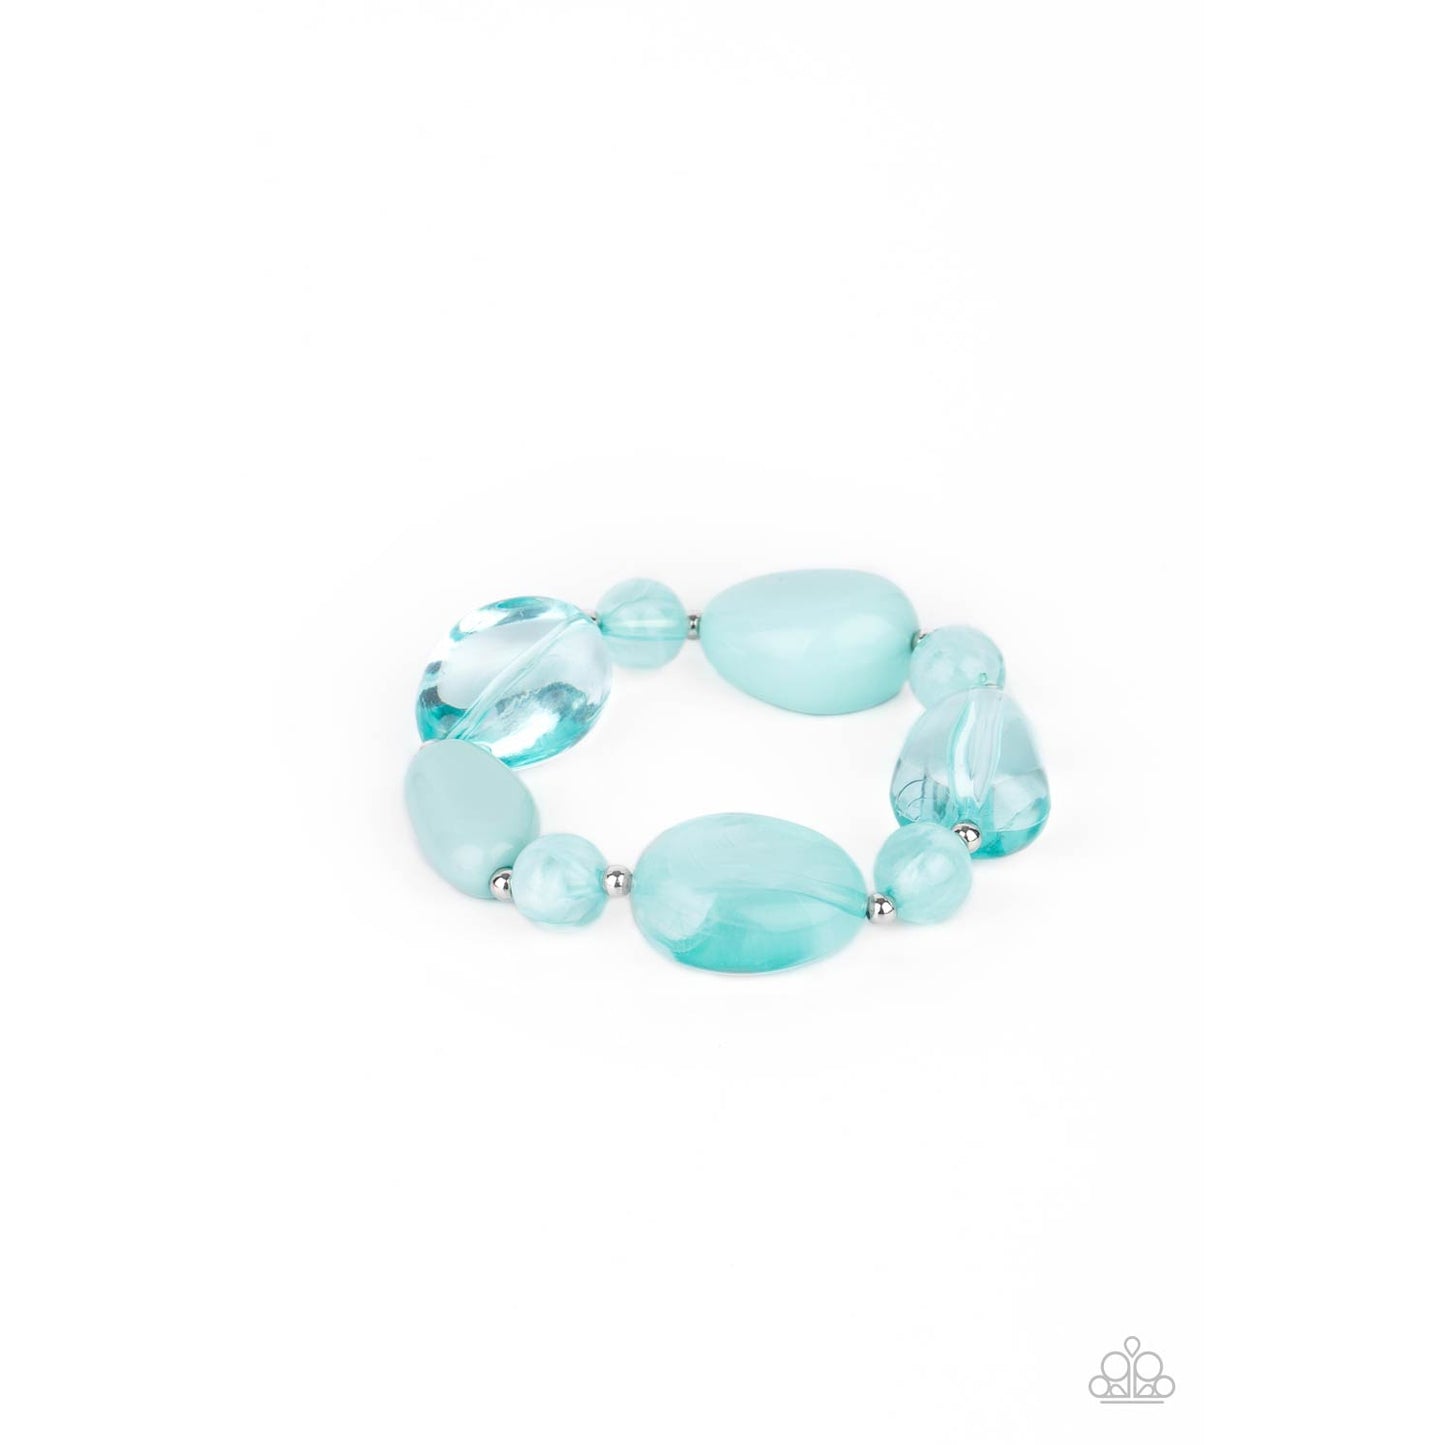 I Need a STAYCATION - Blue Stone Beads Bracelet - Paparazzi Accessories - GlaMarous Titi Jewels